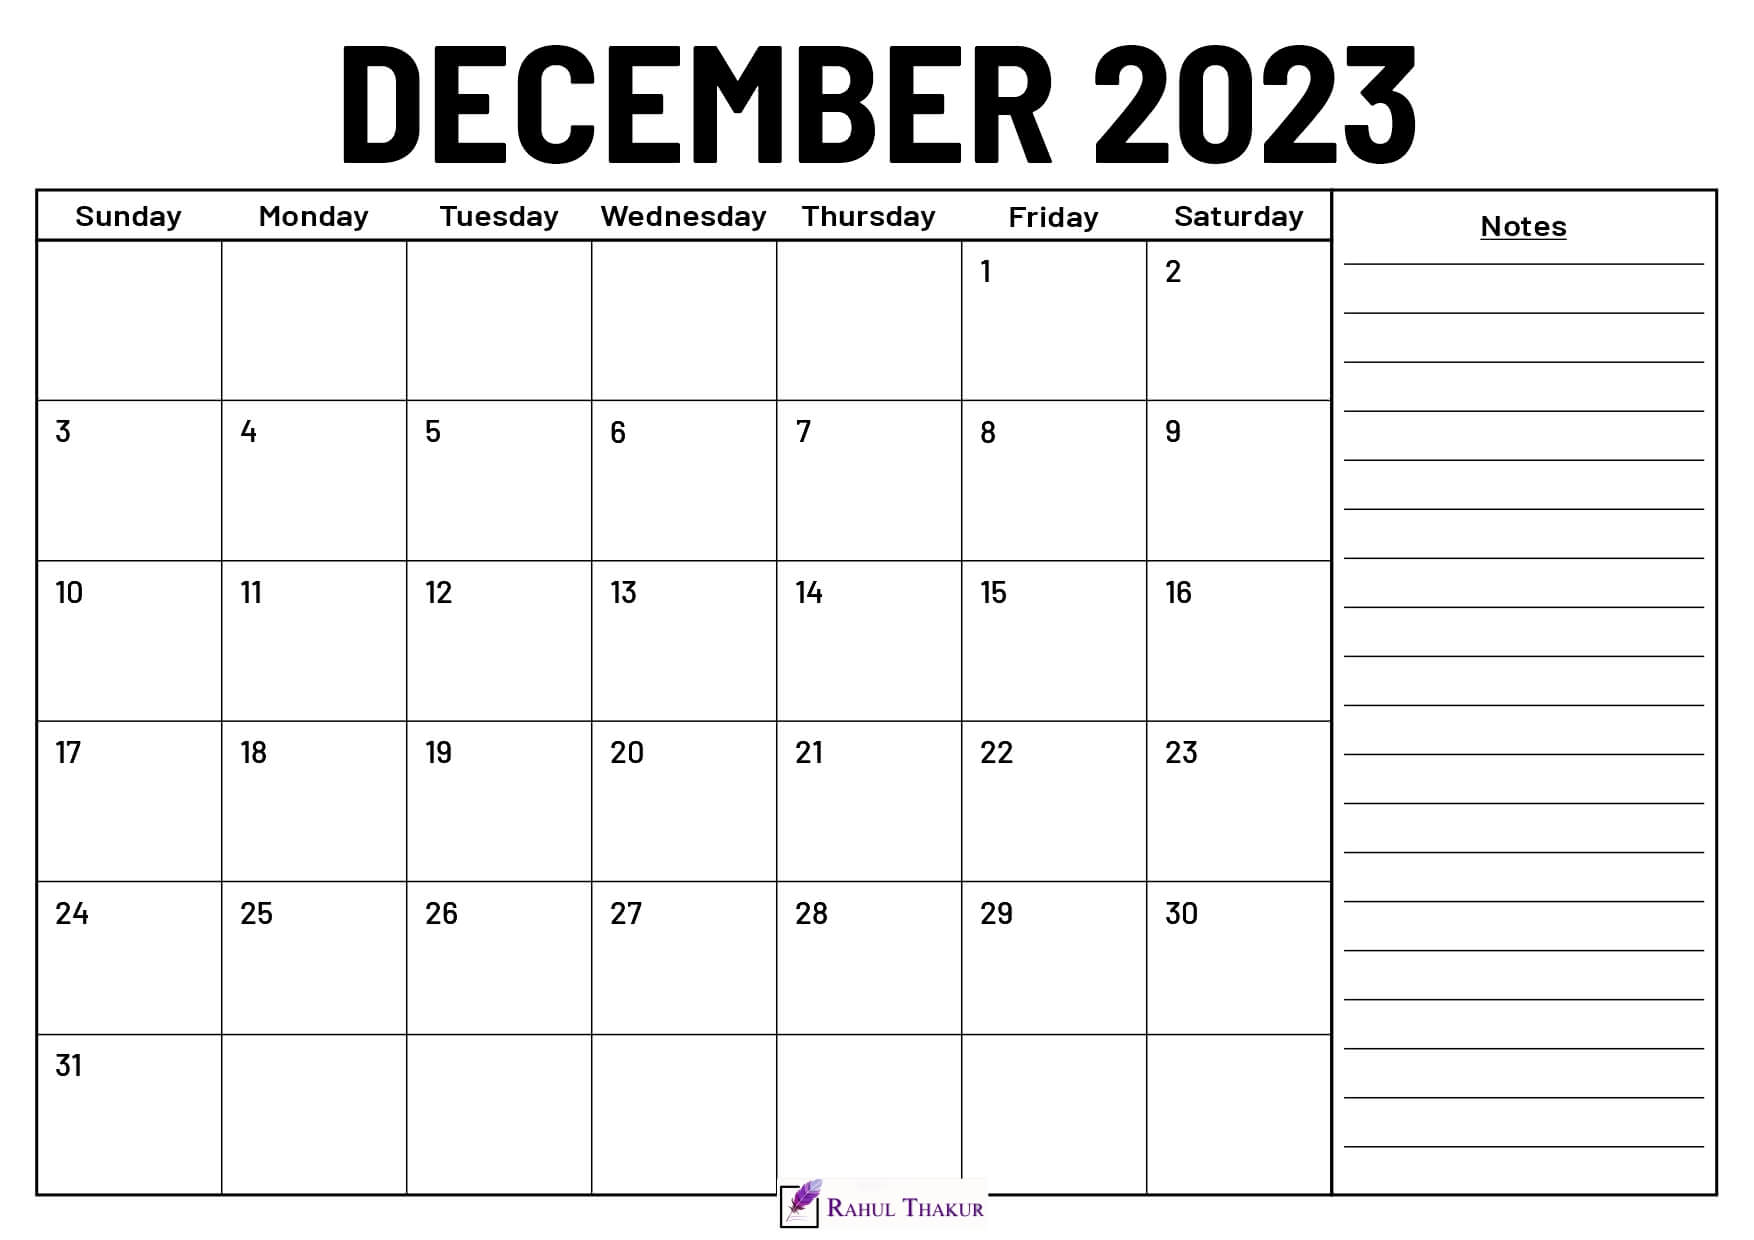 December 2023 Calendar With Notes